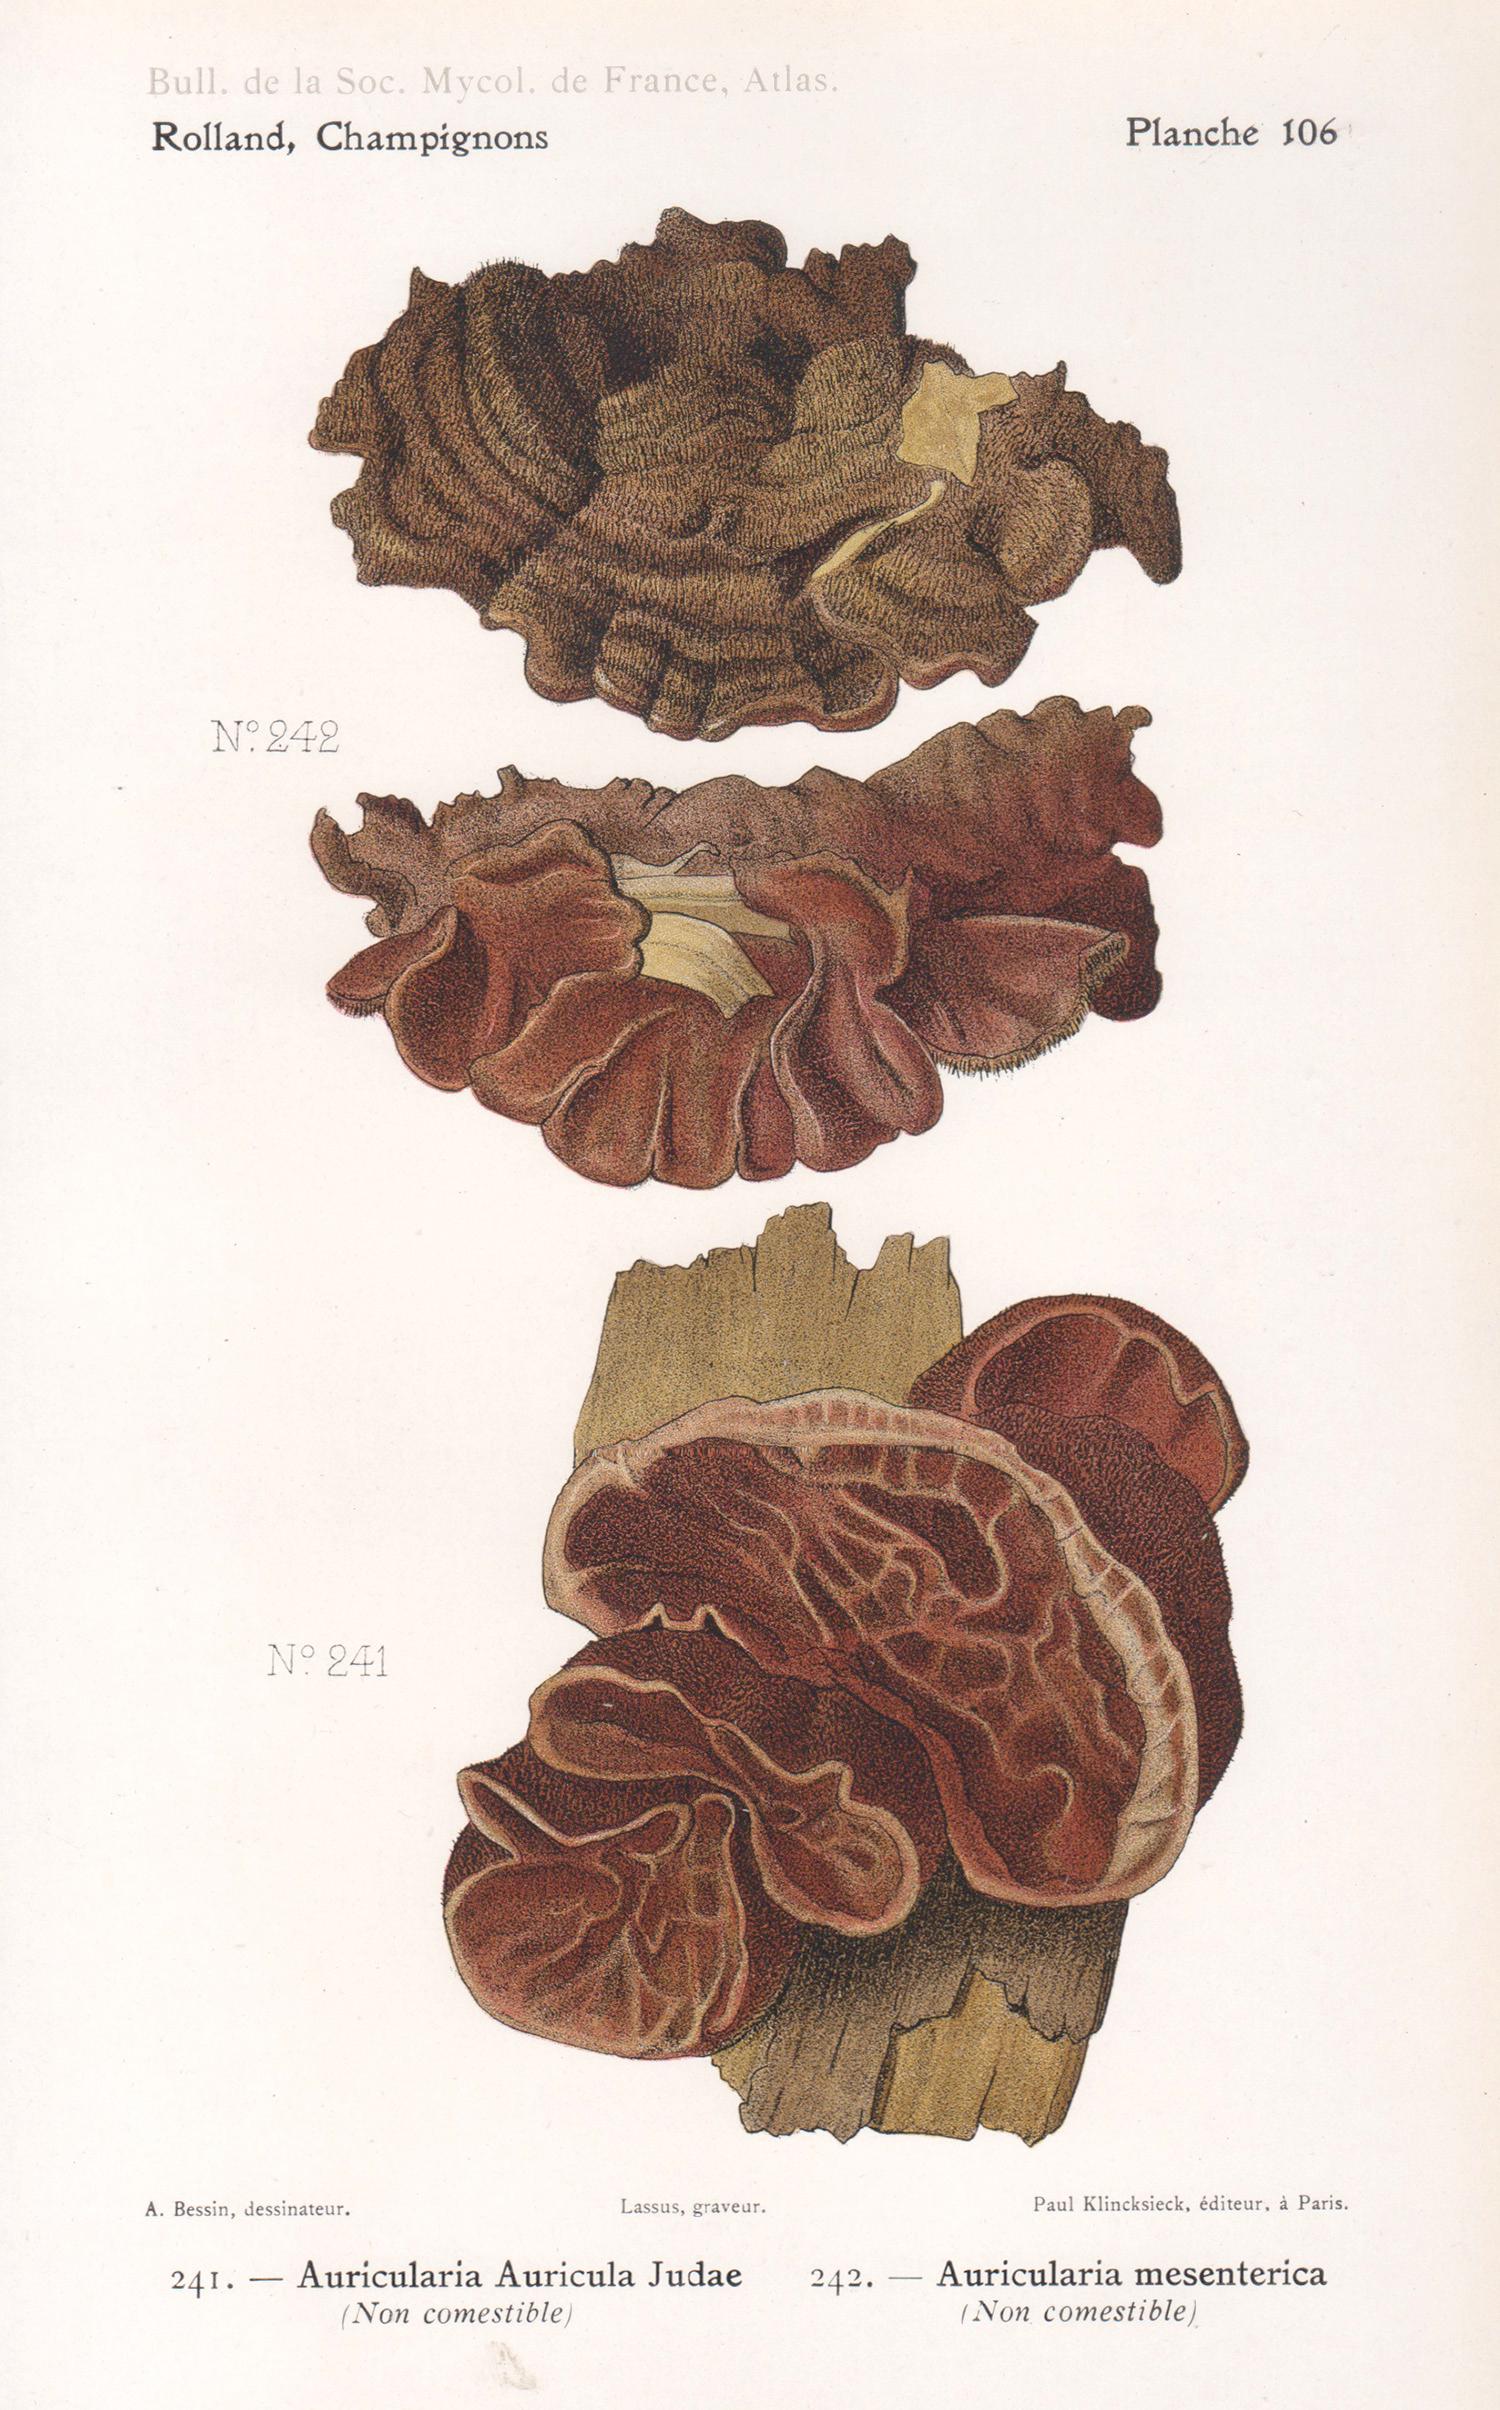 Lassus after Aimé Bessin Still-Life Print - Champignons, French antique mushroom fungi chromolithograph, 1910